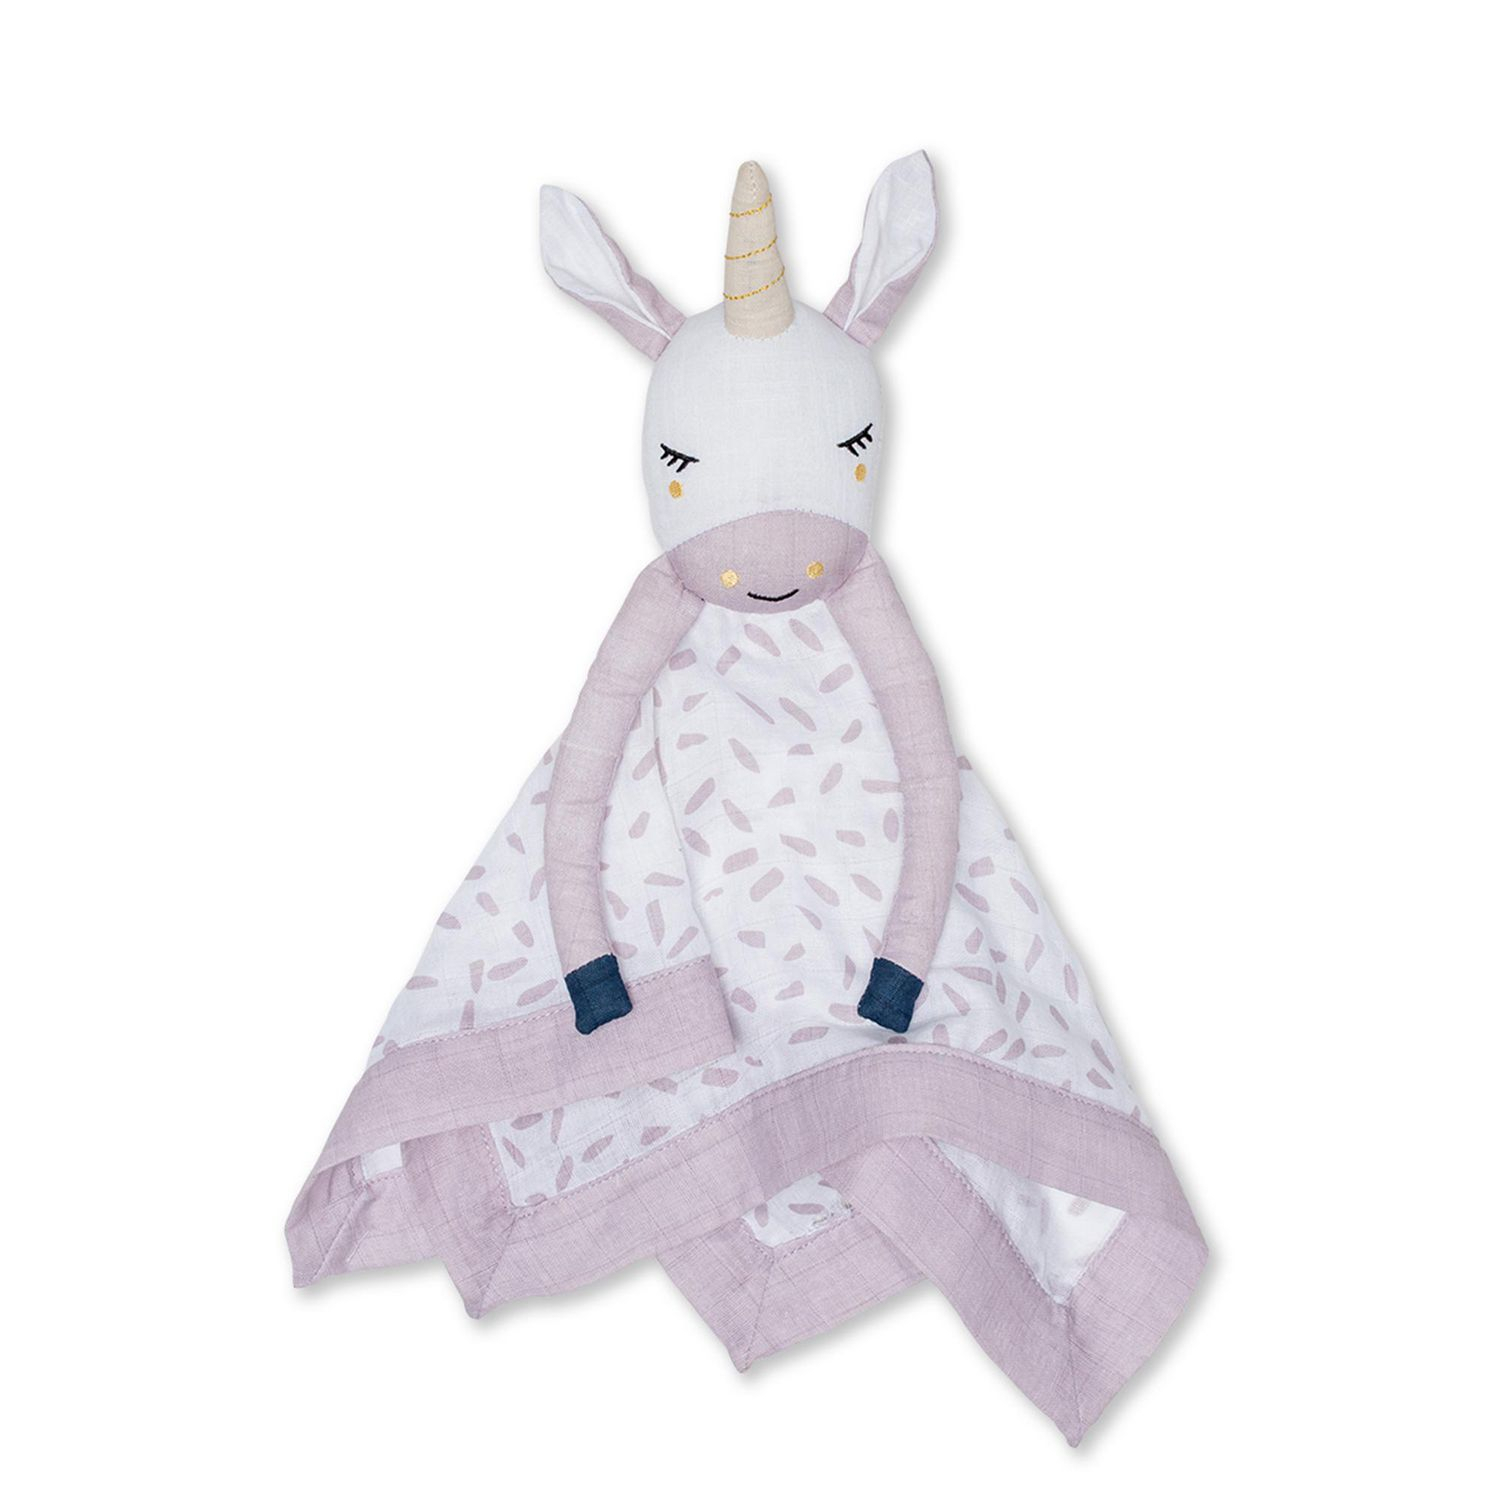 Lulujo - Baby, Infant, Toddler Lovie Security Blanket destiné Walmart Unicorn Blanket